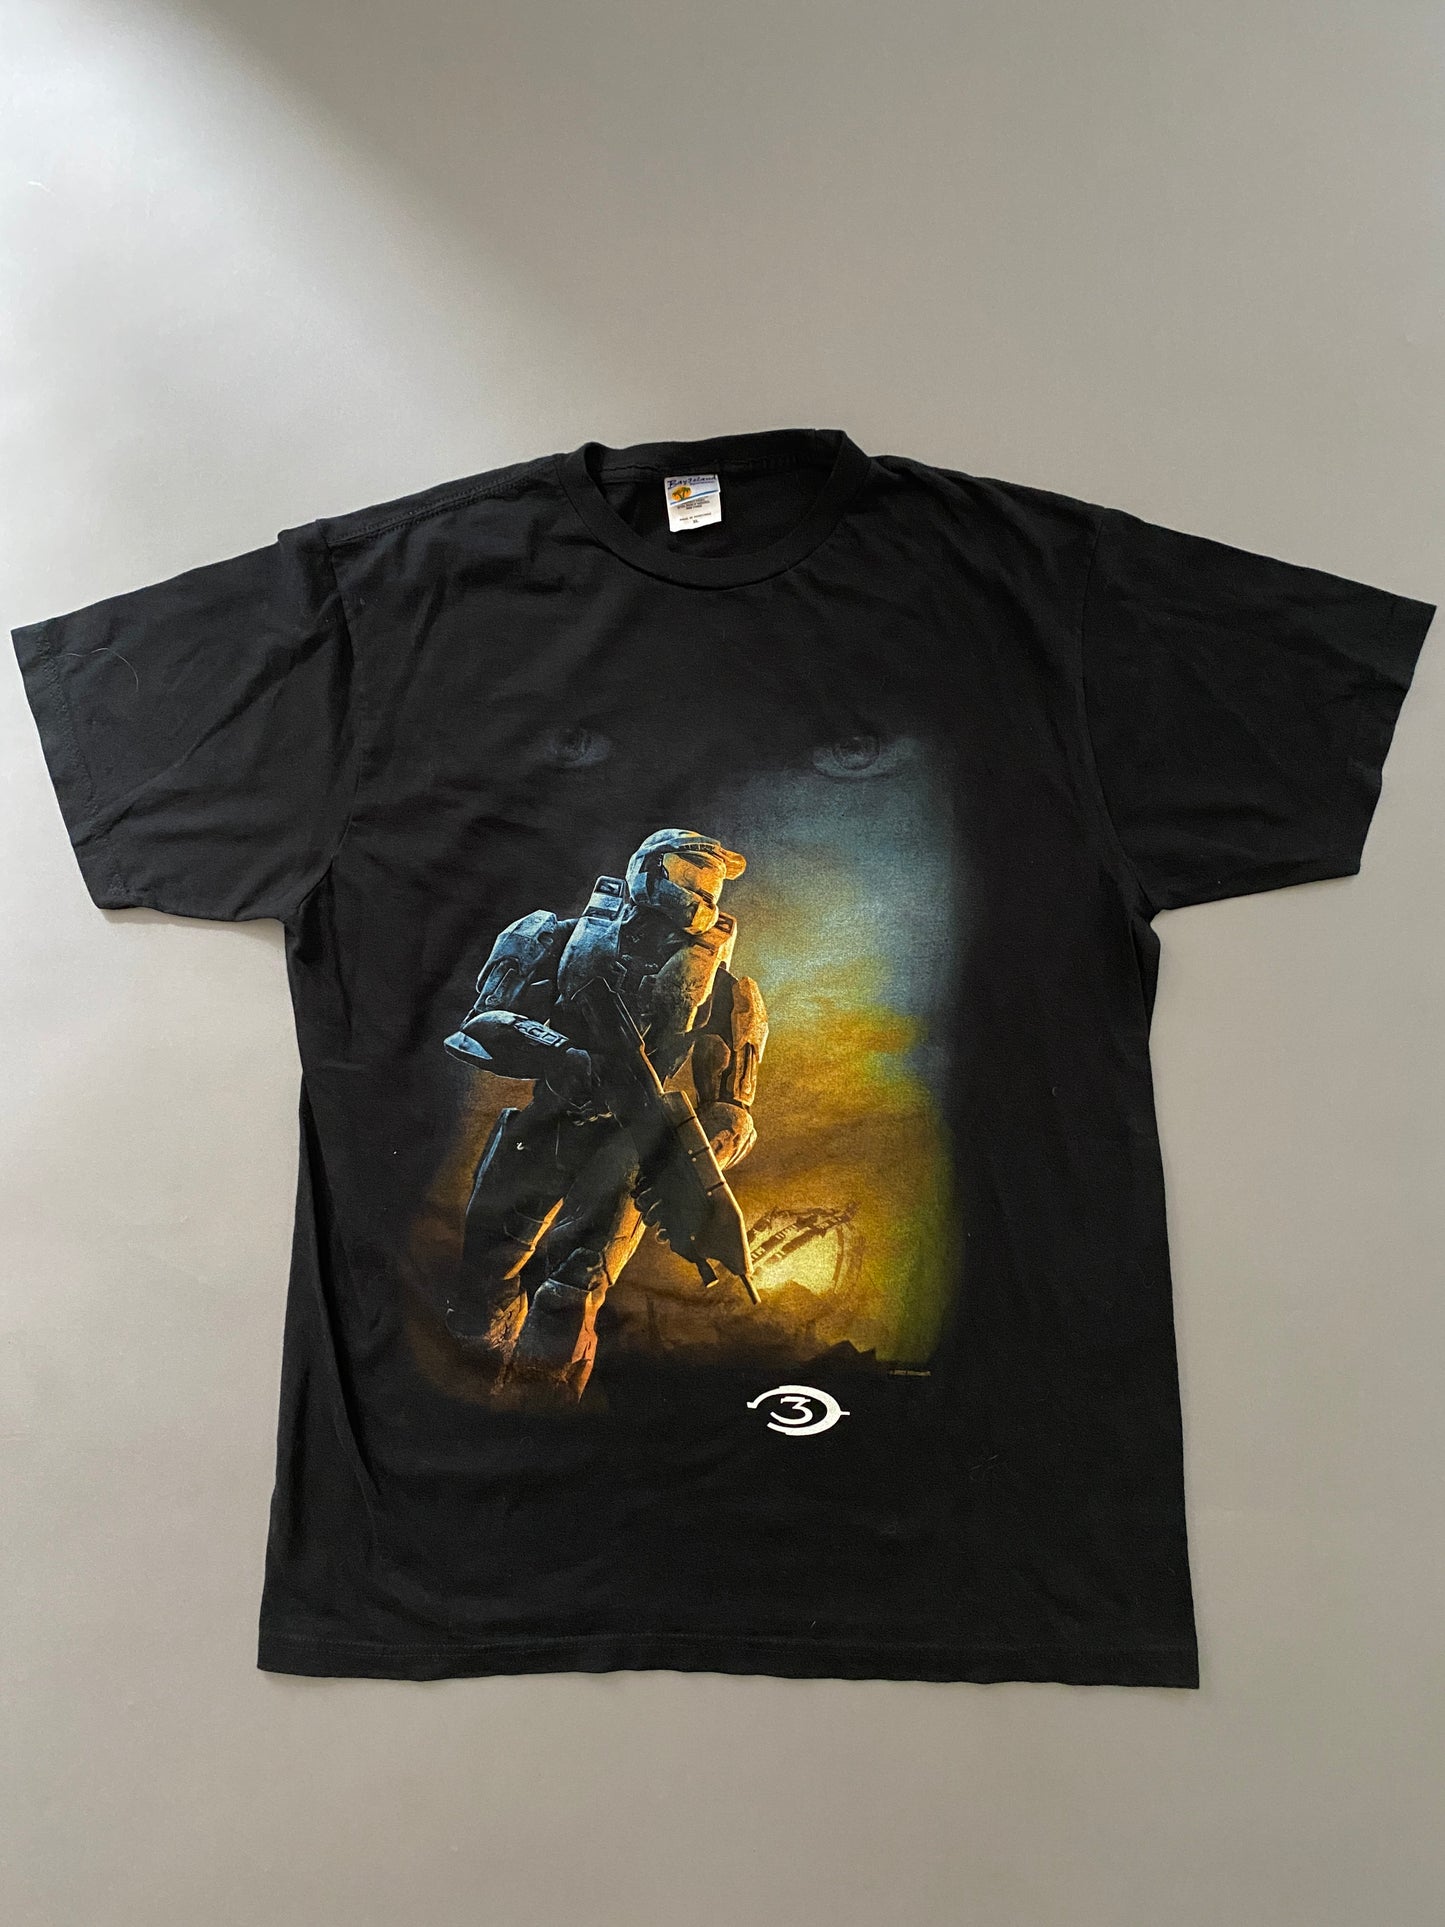 Halo 3 Vintage T-shirt